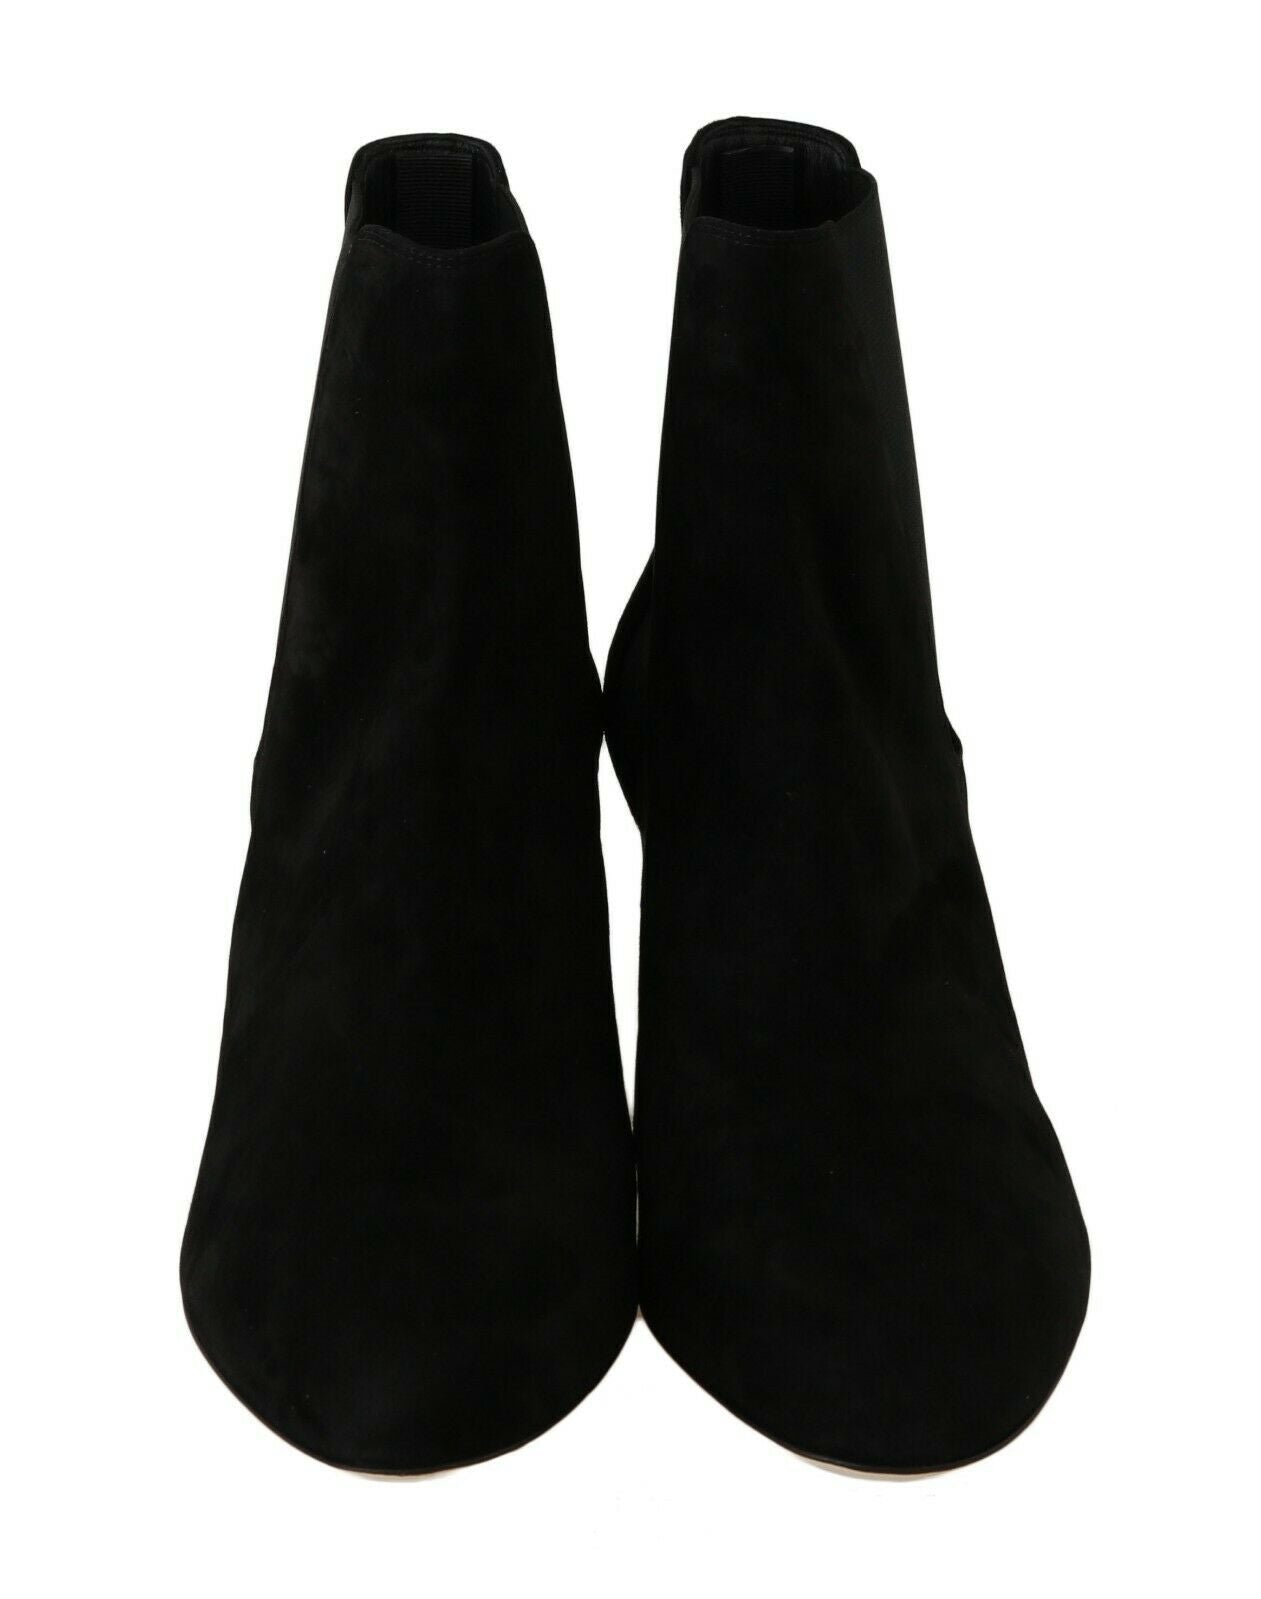 Black Suede Chelsea Heels Boots Shoes